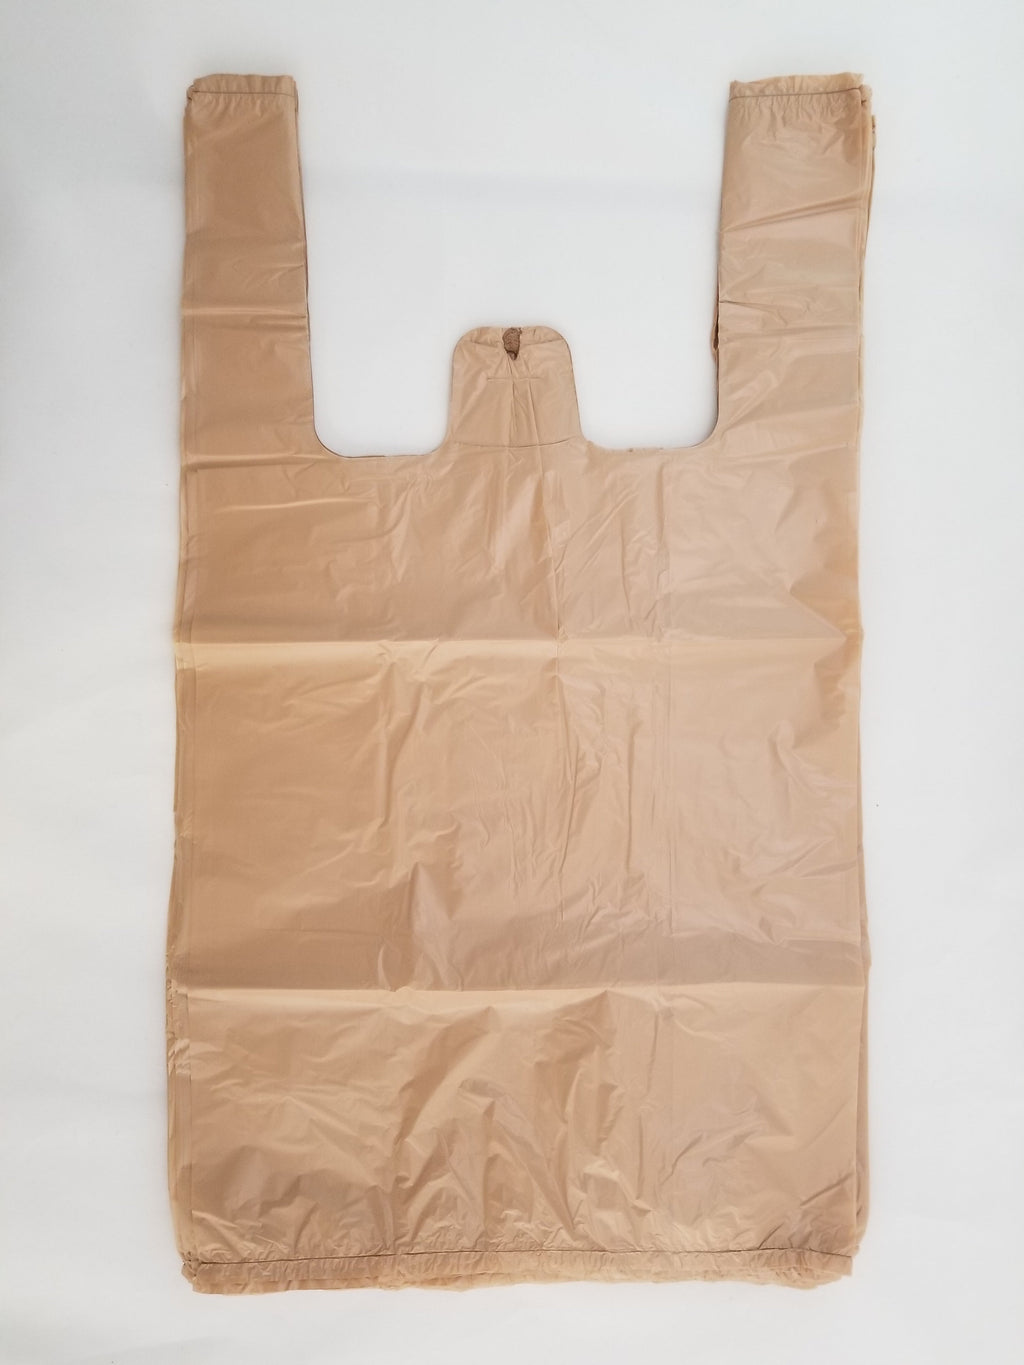 Medium Brown Plastic Shopping Bags-1,000 Bags / Box